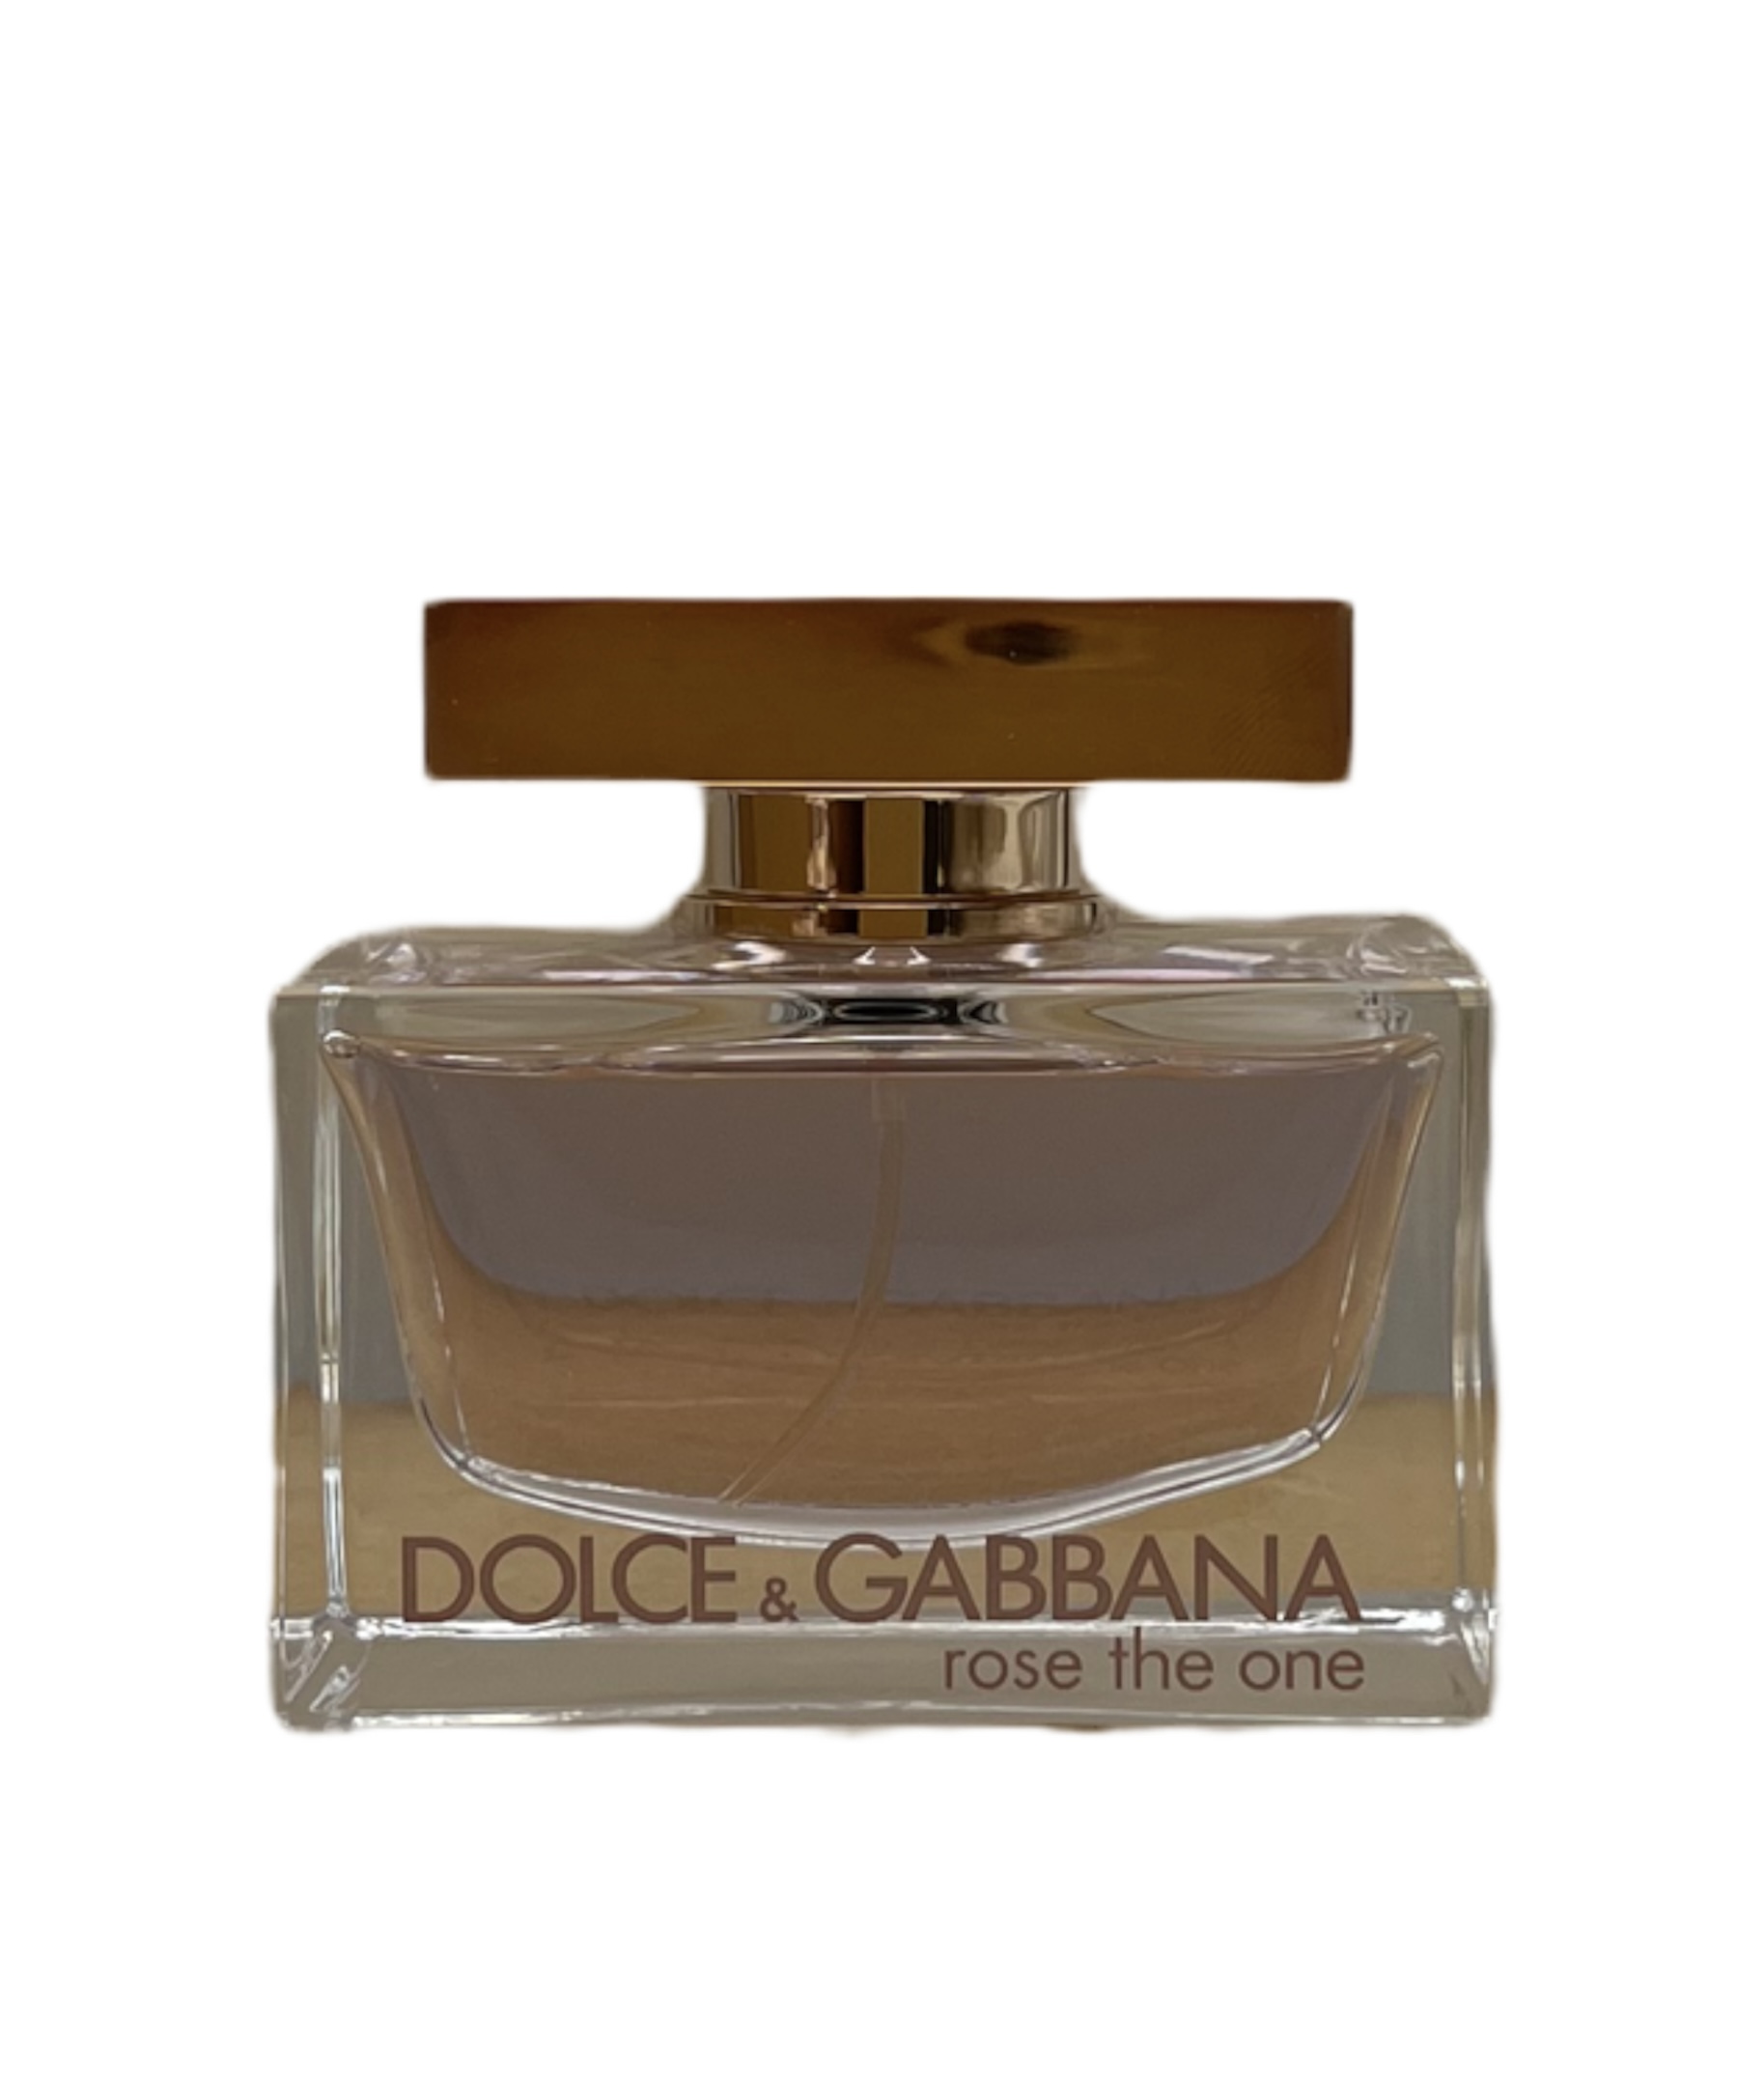  Dolce & Gabbana Rose The One Eau de Parfum 75ml 